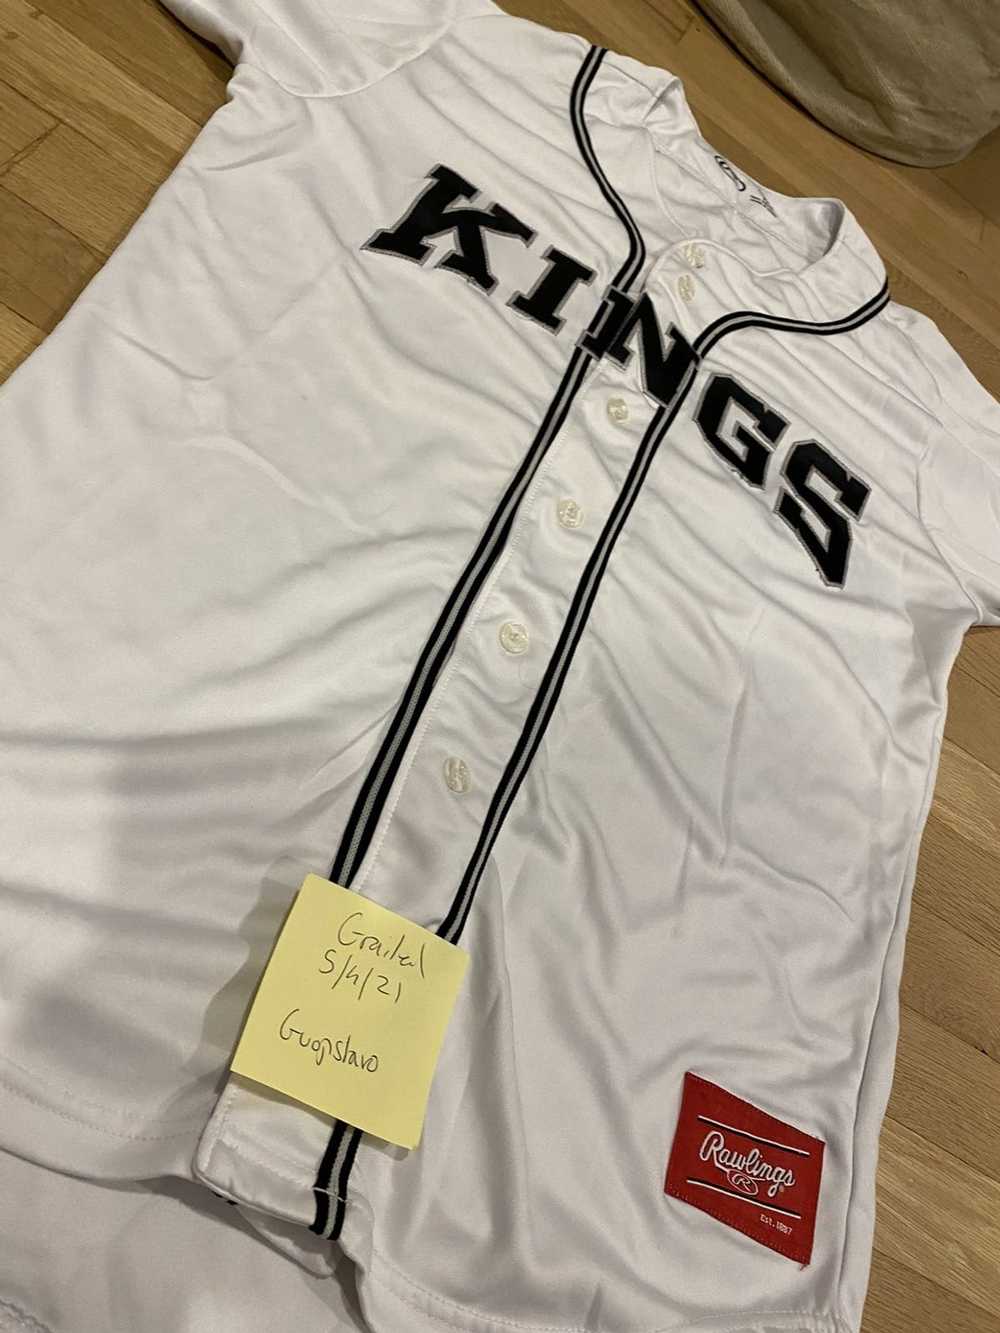 Jersey Kings pinstripe baseball jersey - image 2